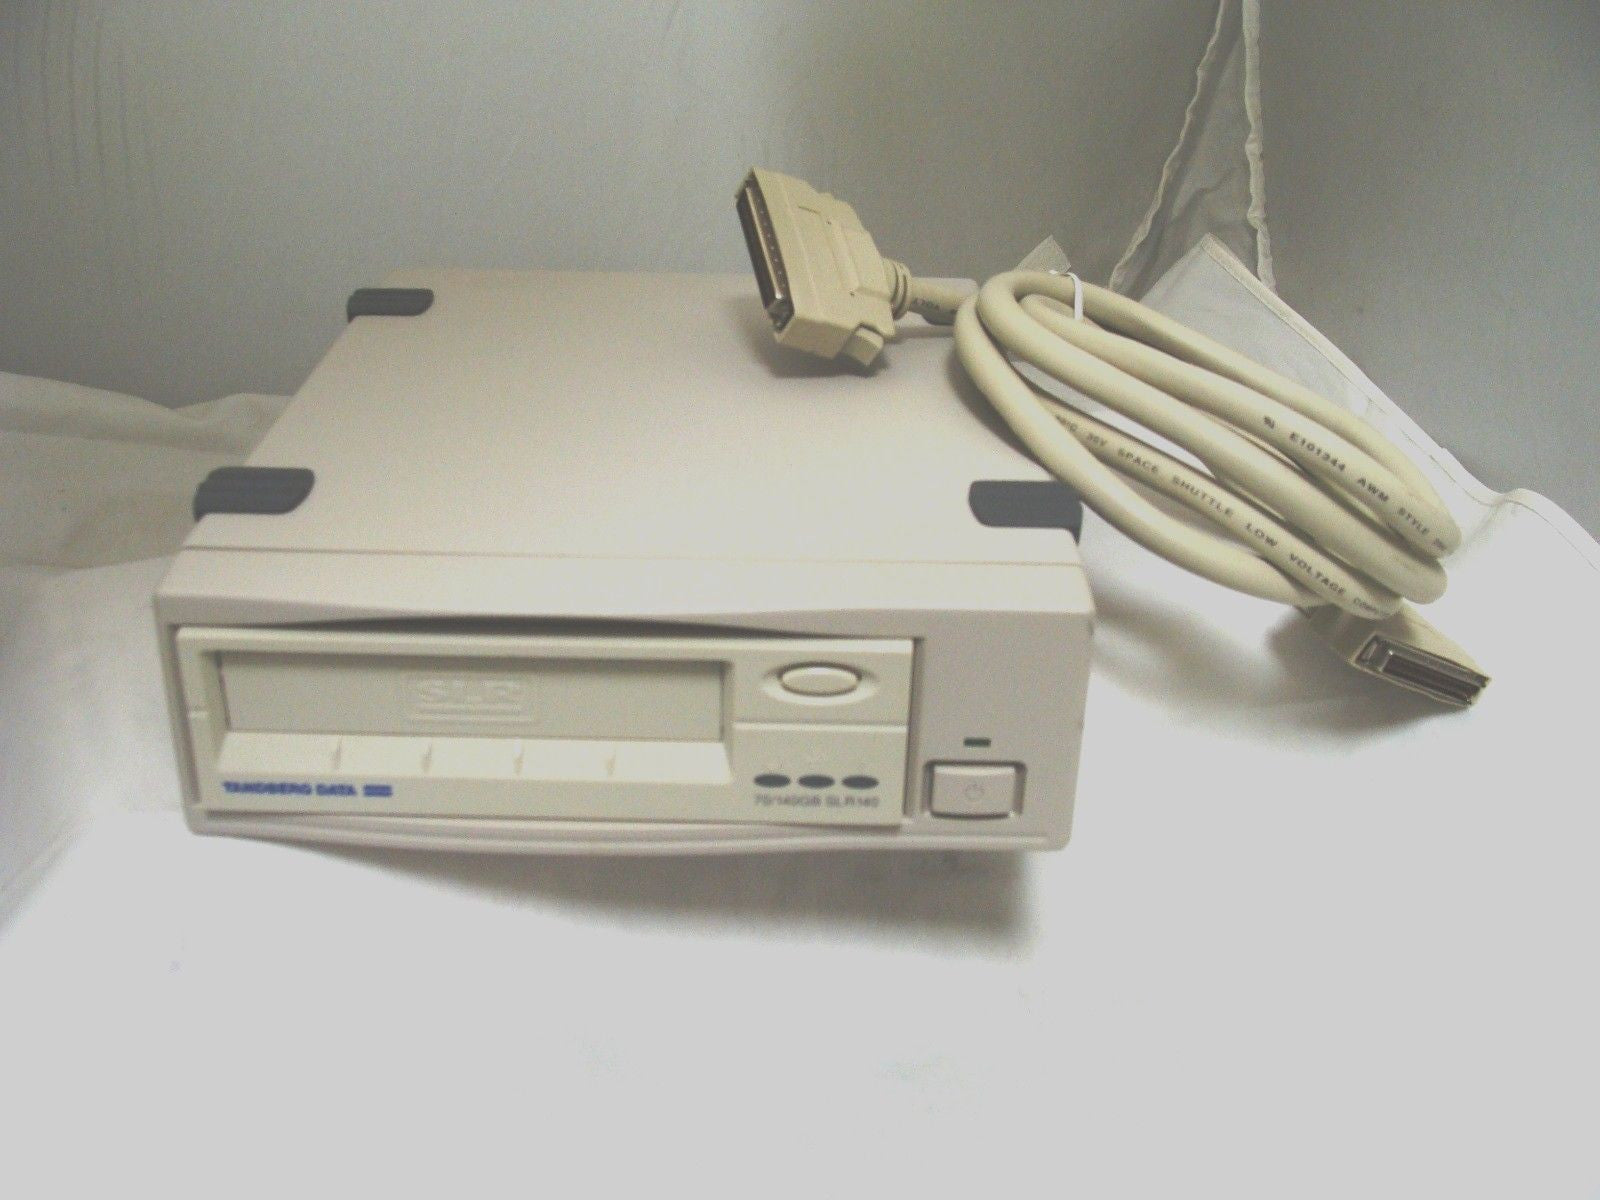 Tandberg SLR140  SCSI Internal Tape Drive 70/140GB - Micro Technologies (yourdrives.com)